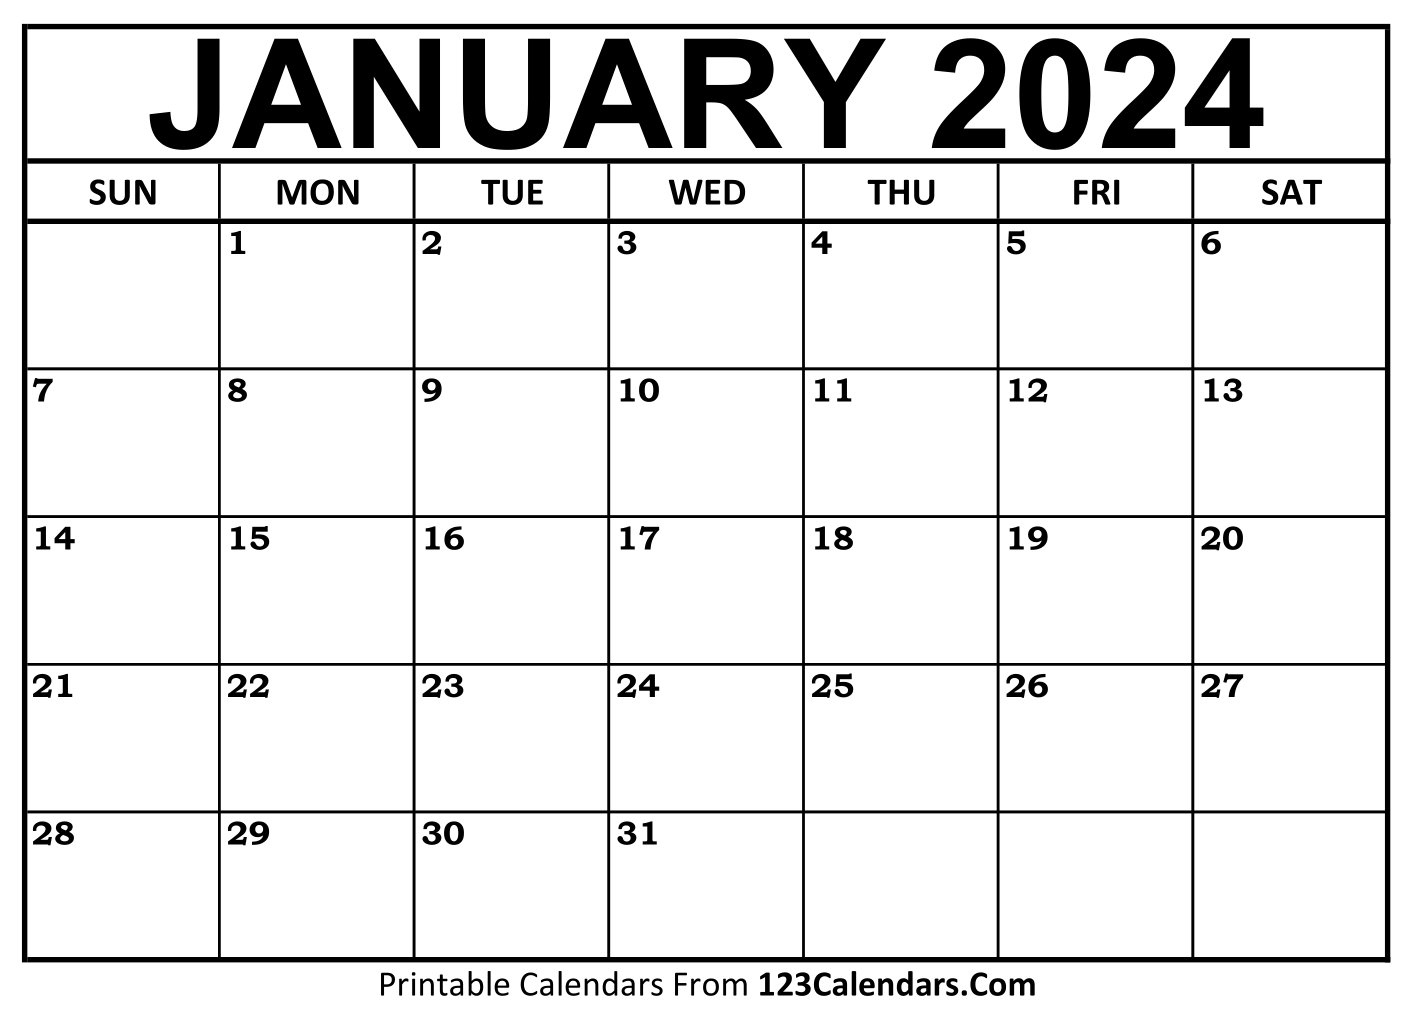 Printable January 2024 Calendar Templates - 123Calendars | January 2024 Calendar Printable Free Editable